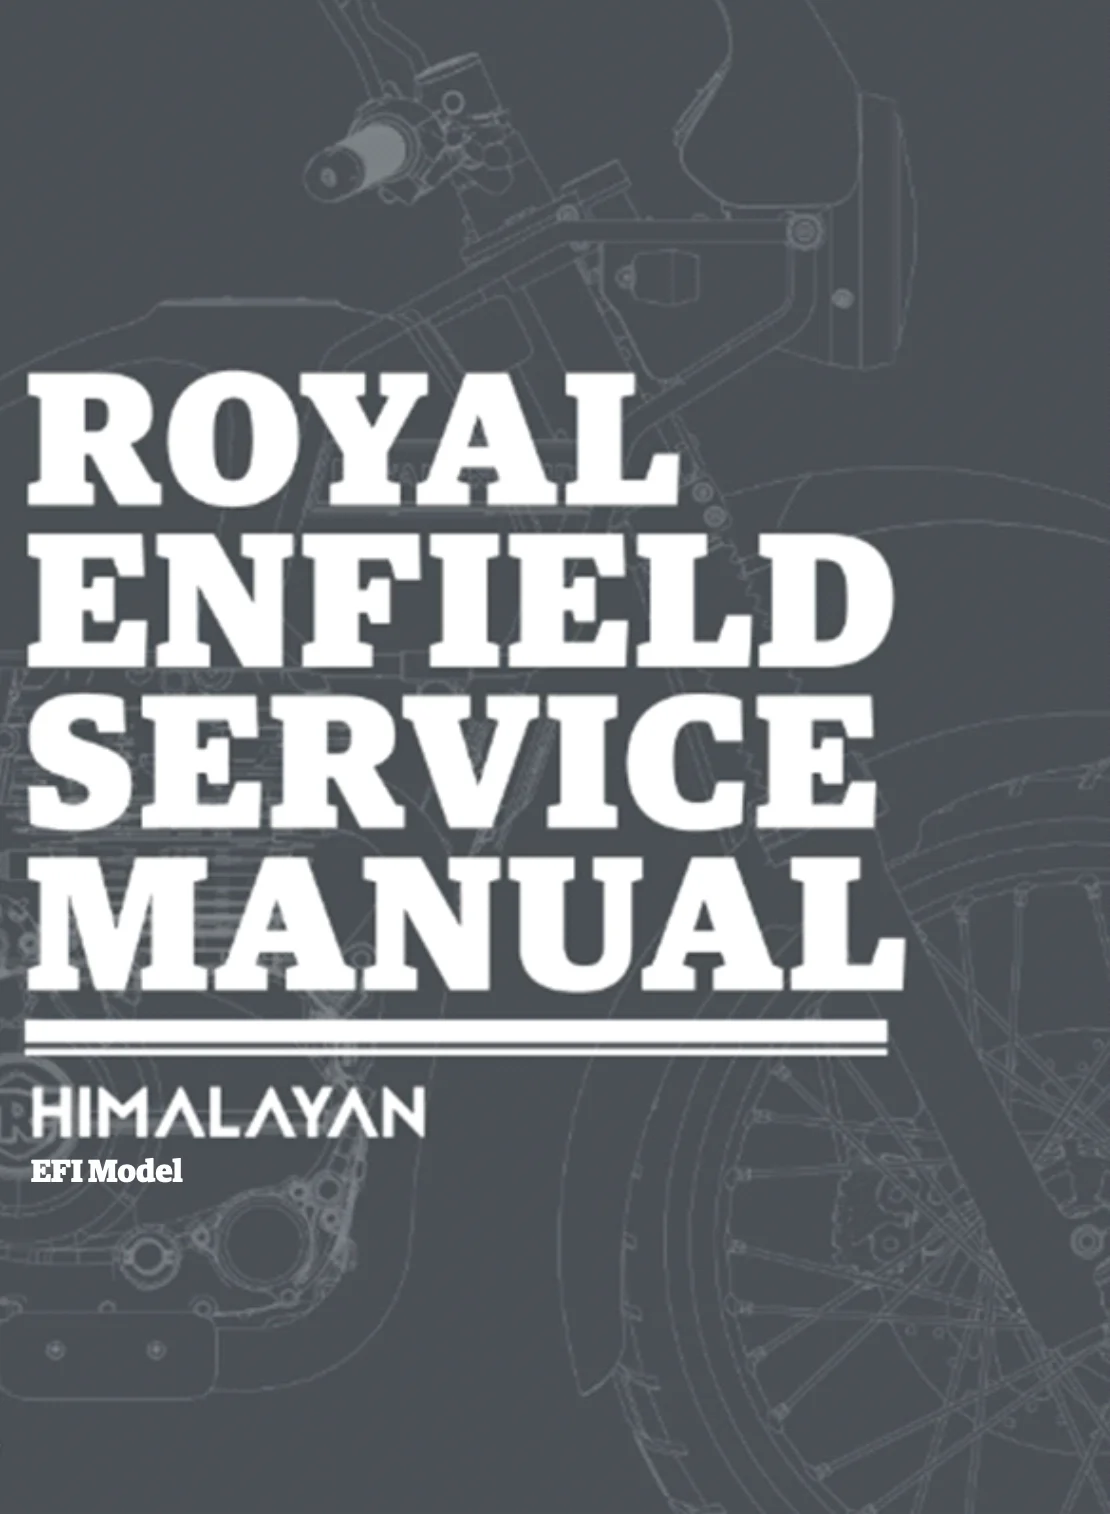 Royal Enfield Himalayan EFI model 2017 and later original motorcycle manufacturer's PDF repair manual download